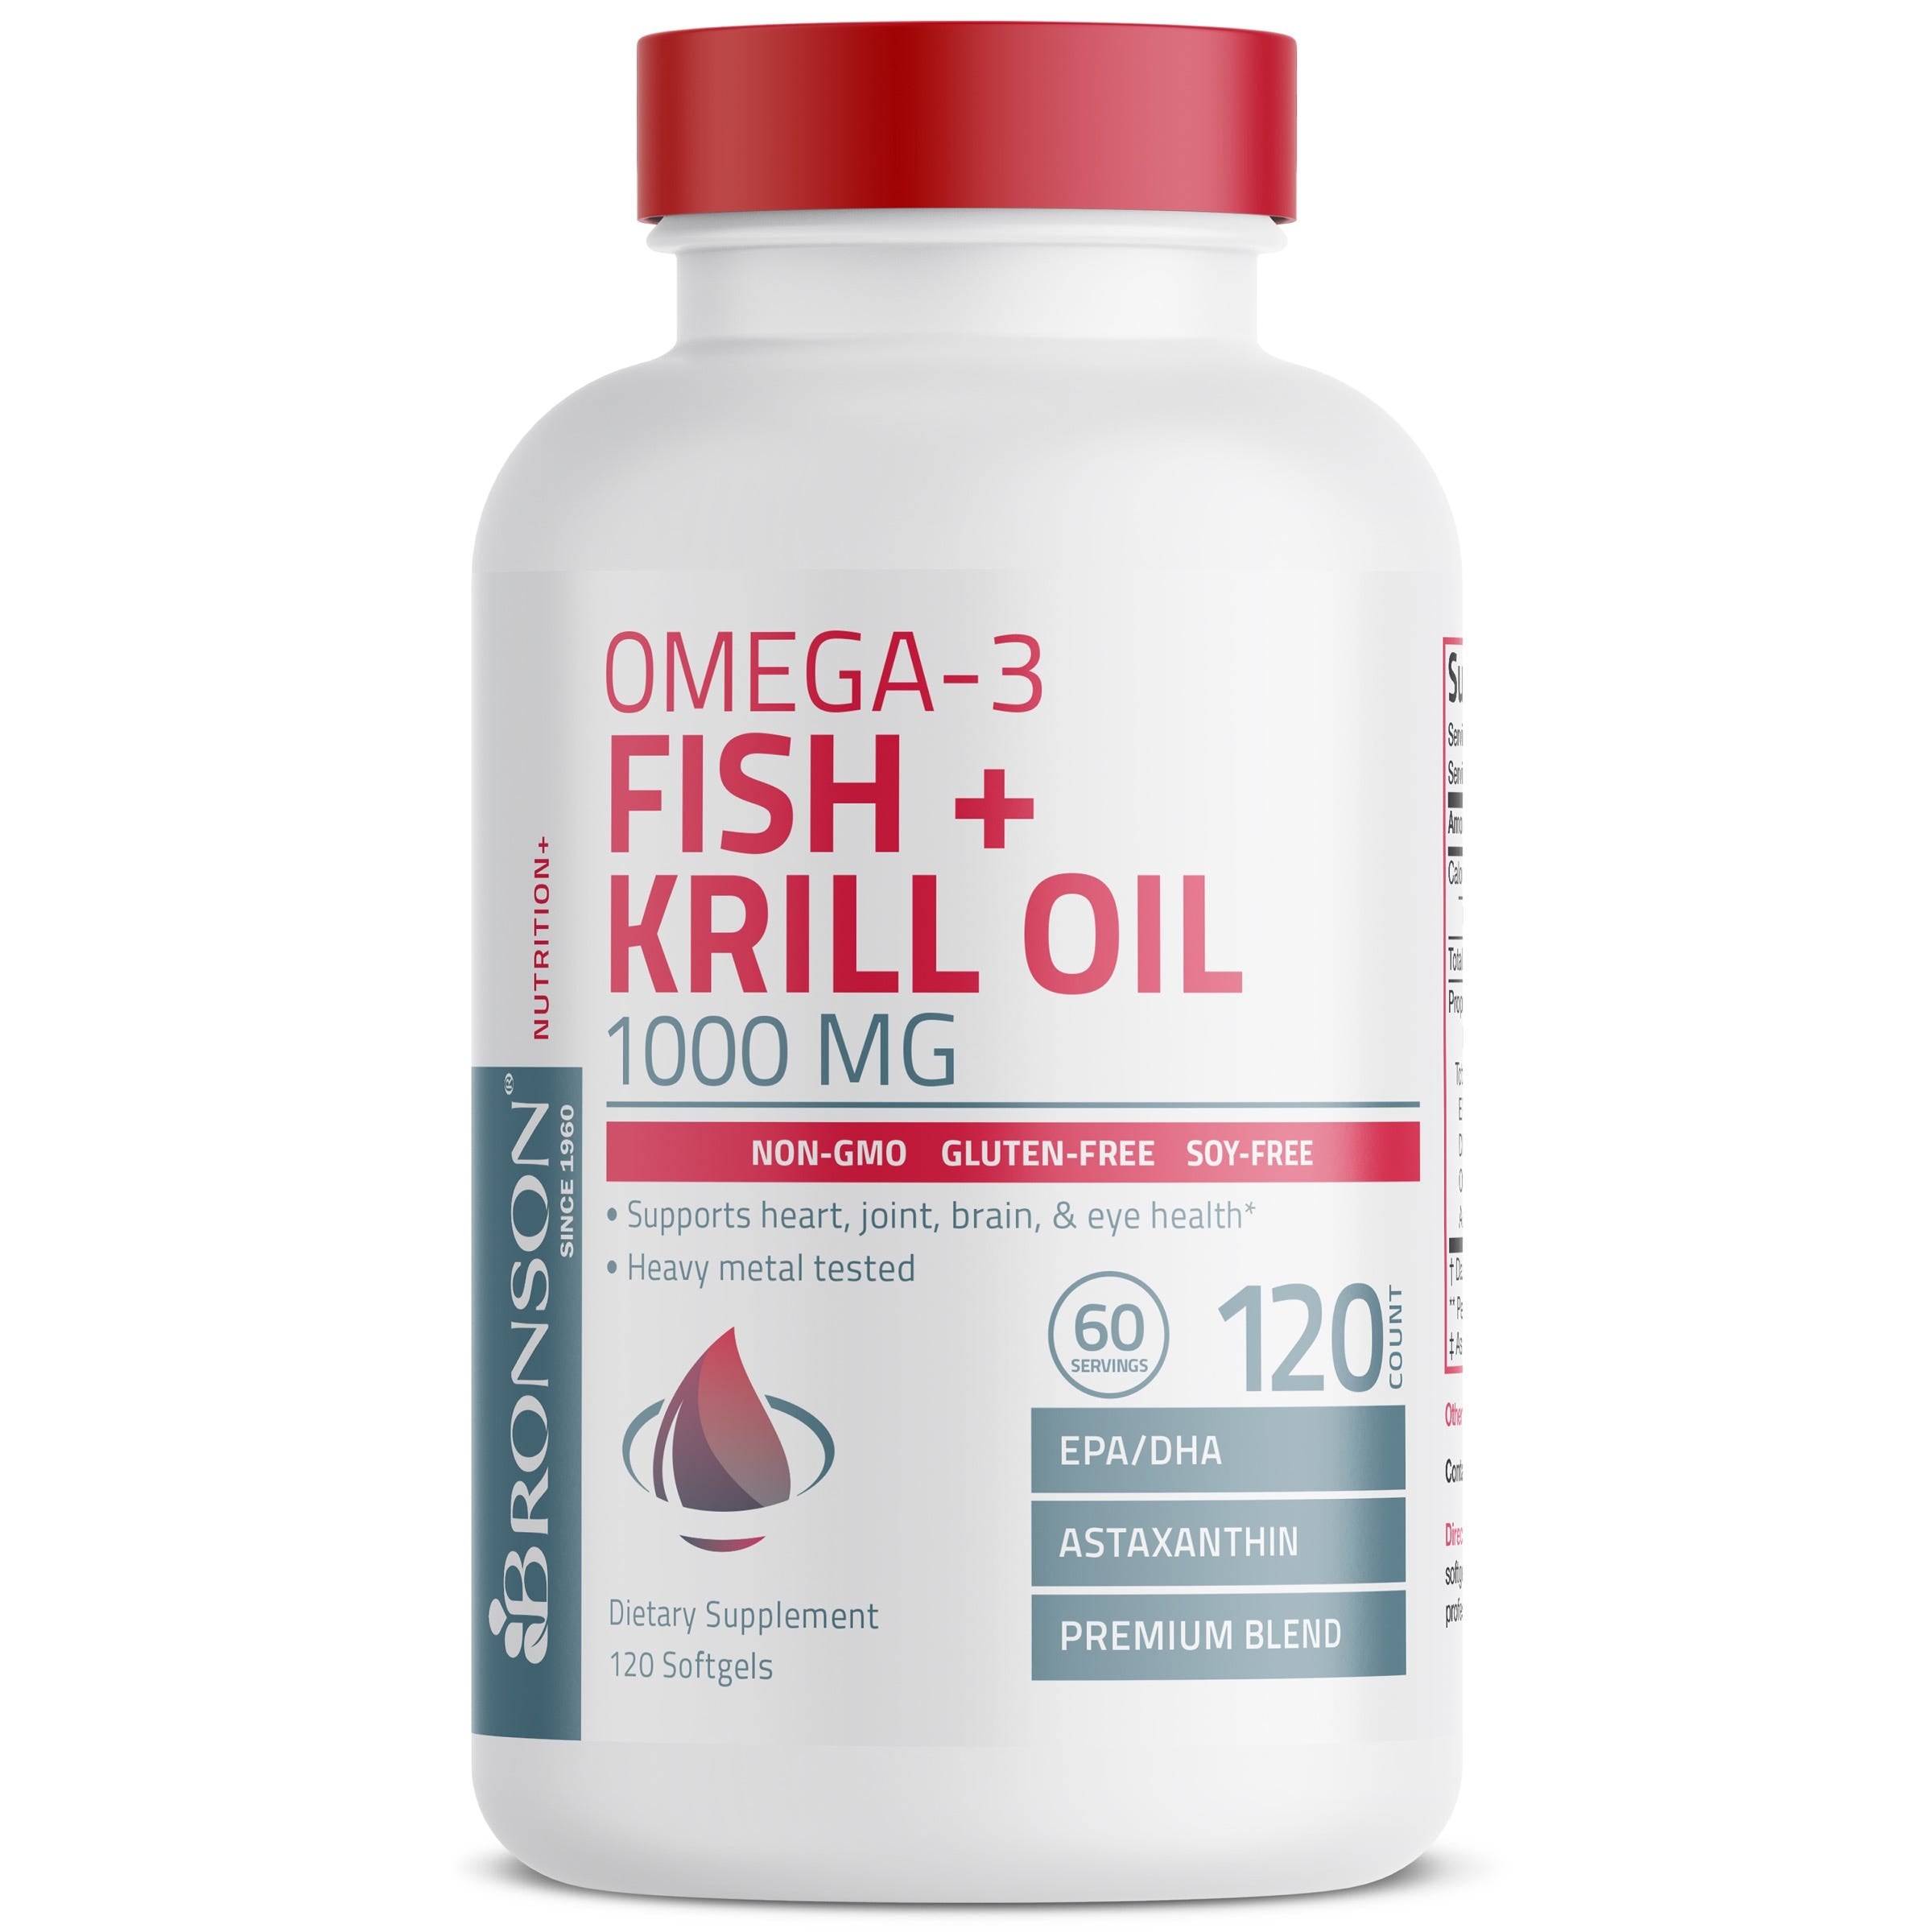 Omega-3 Fish + Krill Oil 1000 MG 120 Softgels view 5 of 7